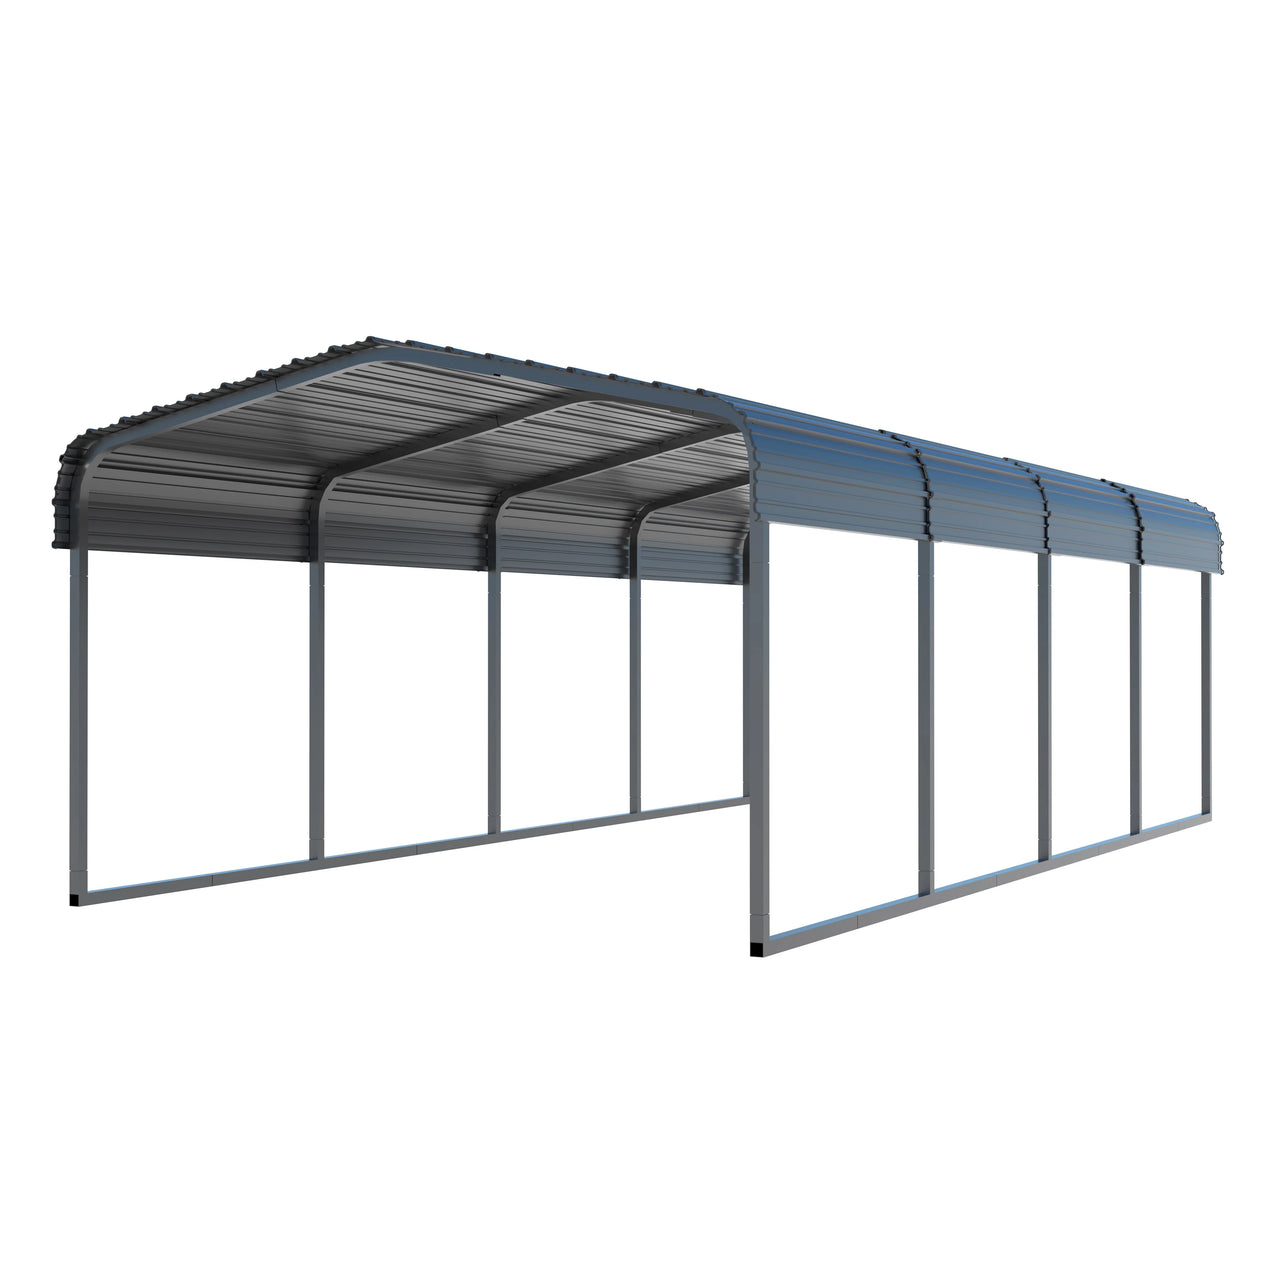 VEIKOUS Outdoor Carport Metal Canopy 12' X 20'